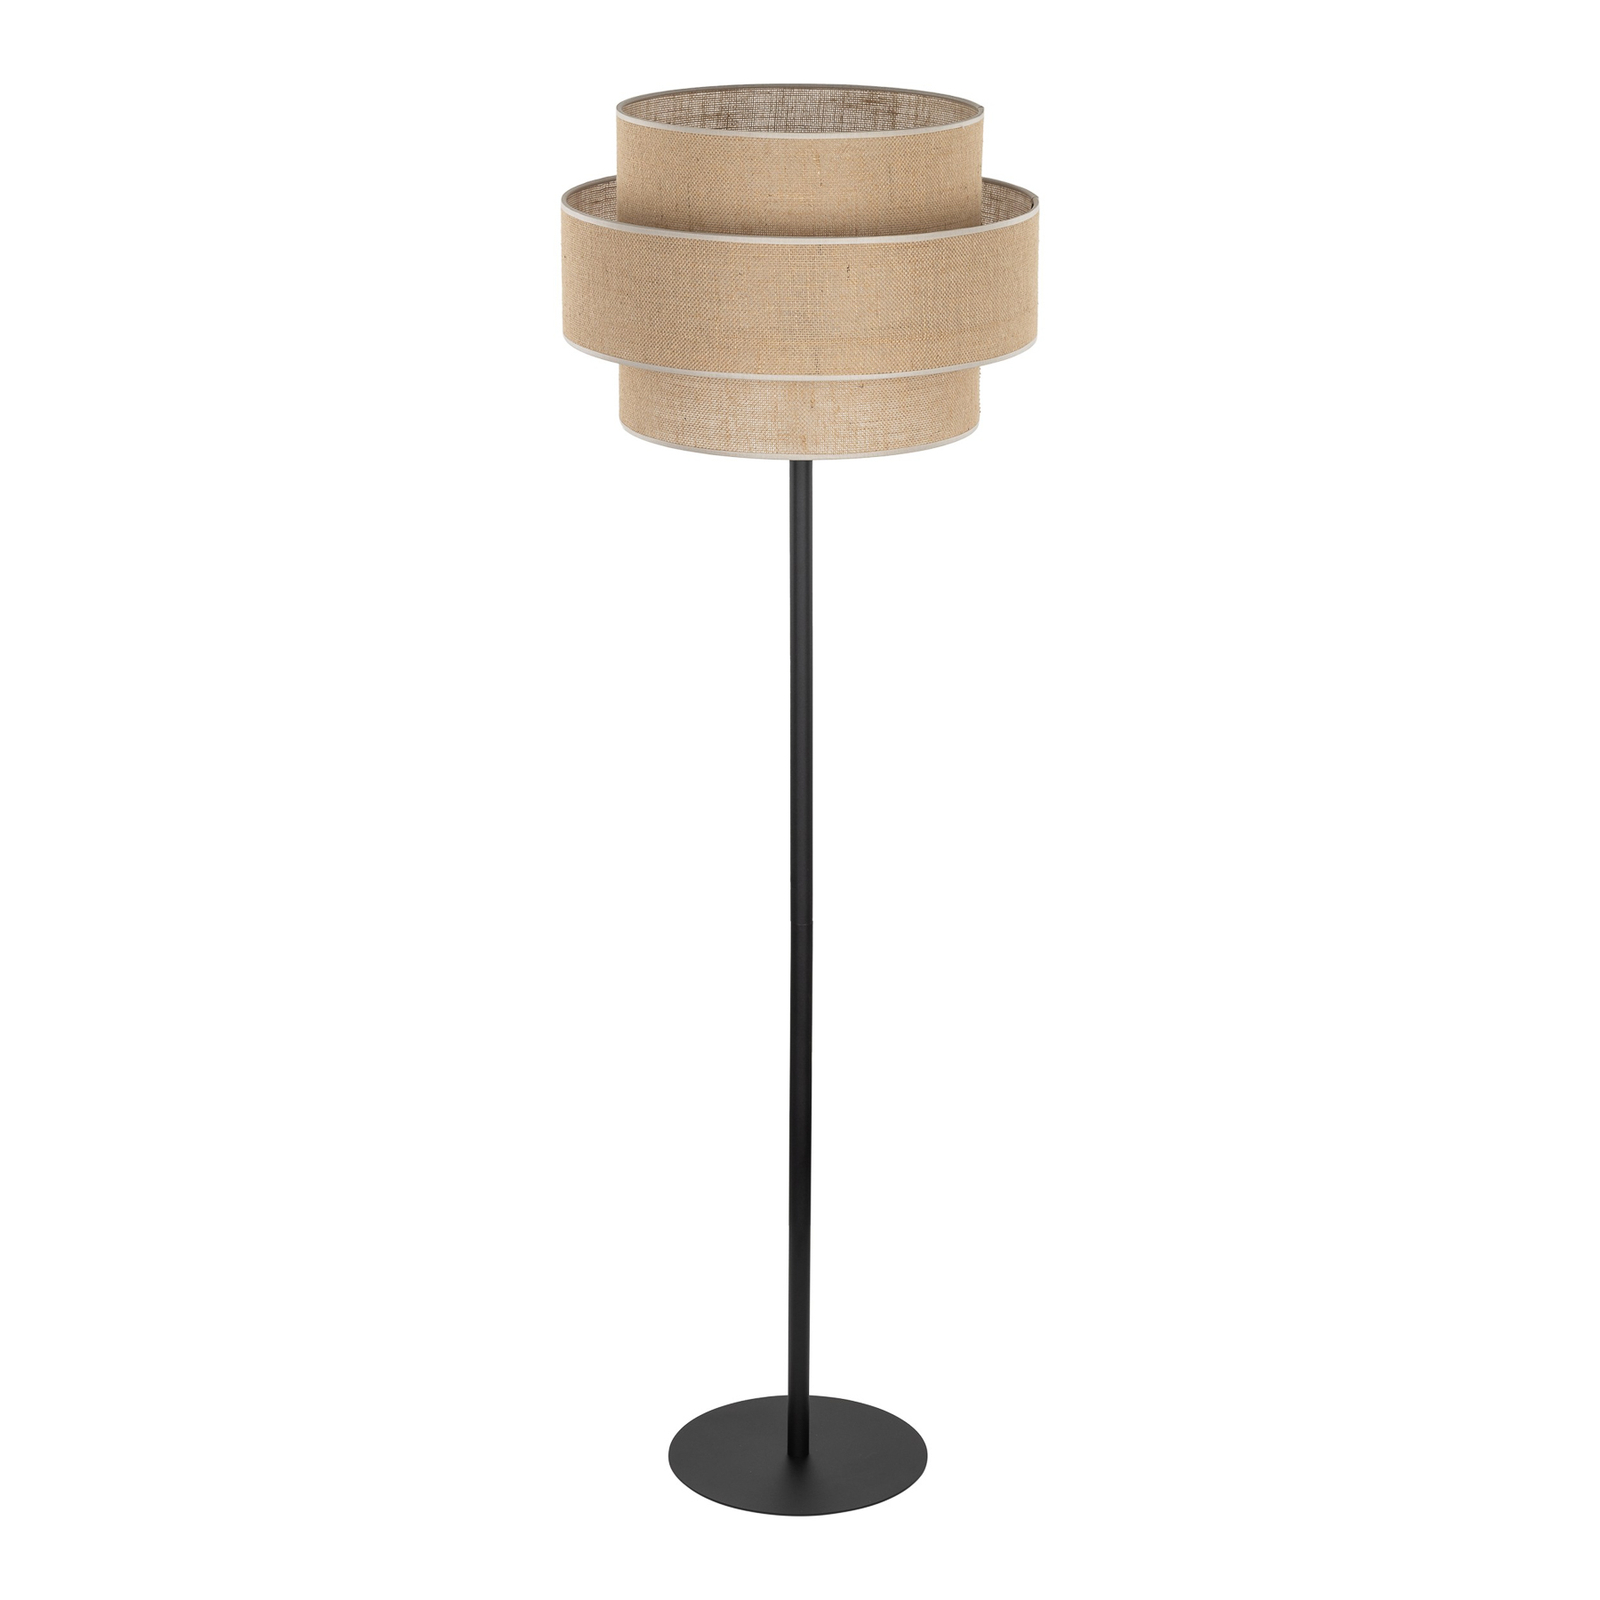 Calisto gulvlampe, jute, sylinder, naturbrun, høyde 155 cm